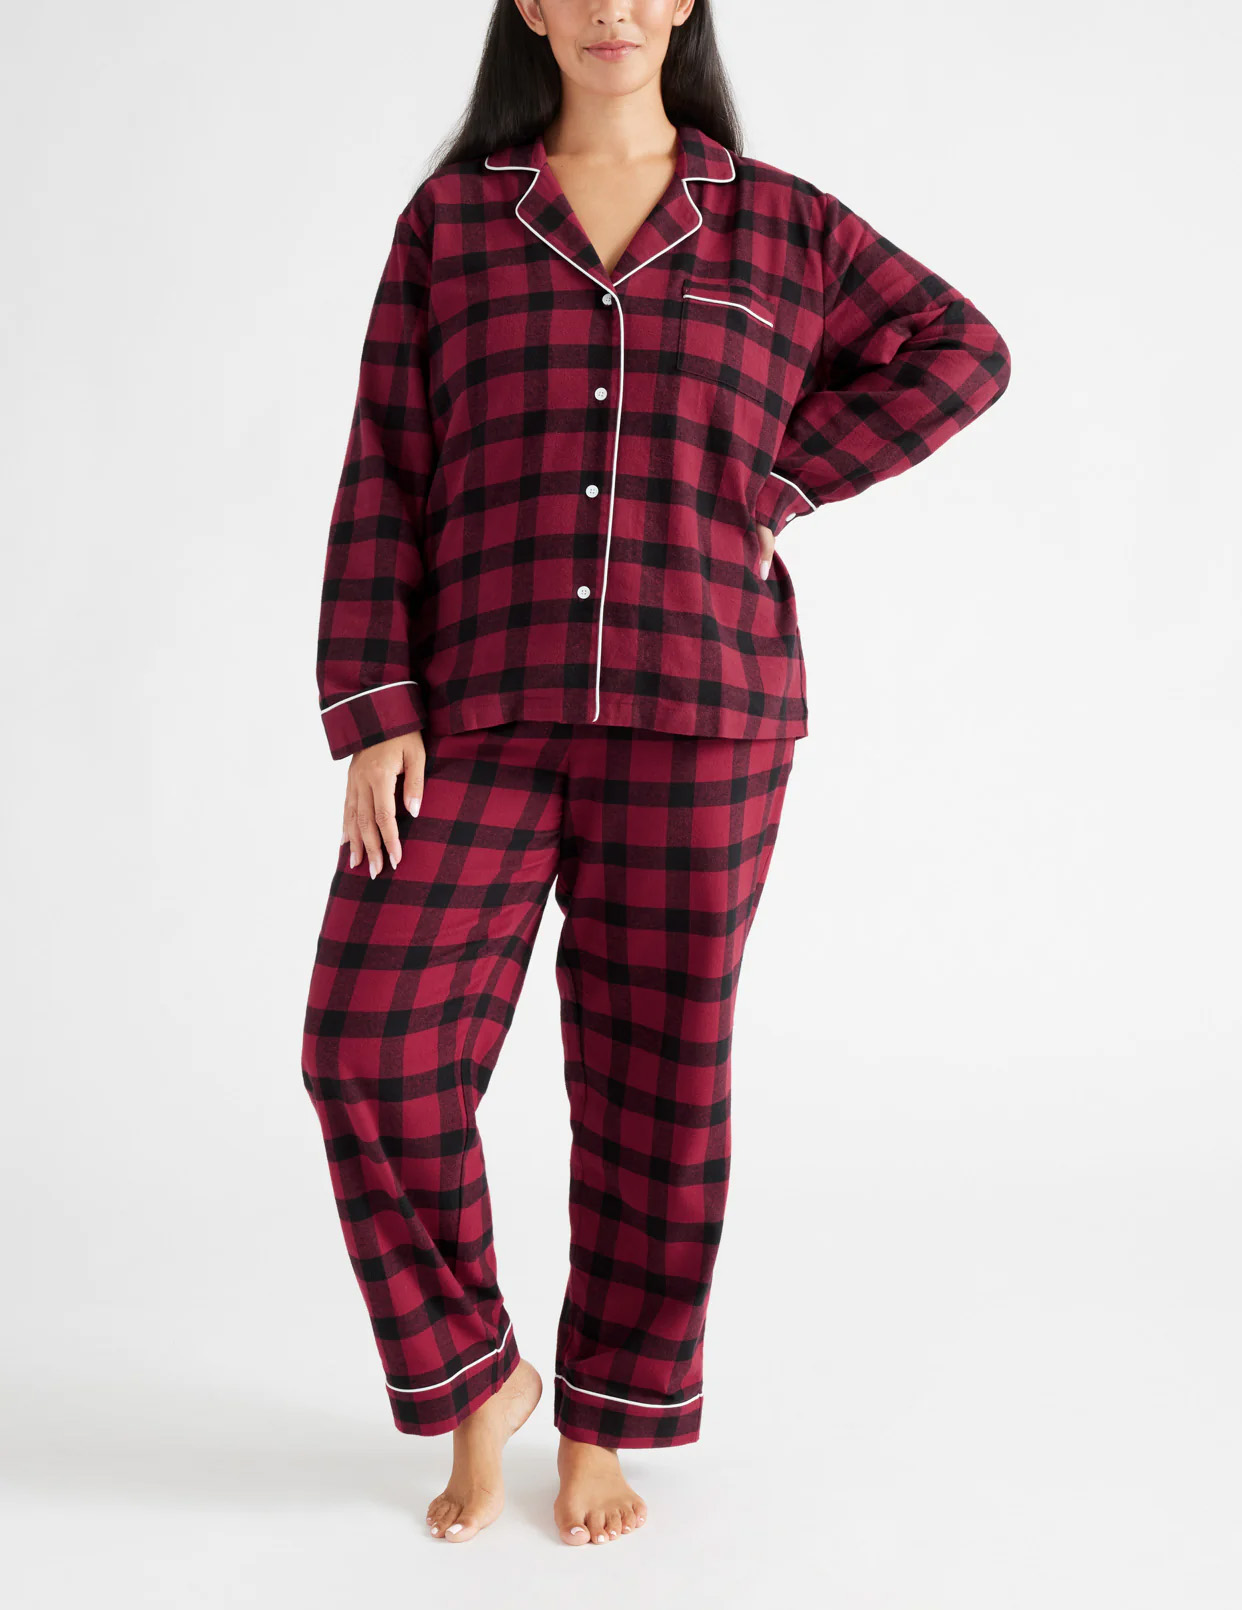 Knix Red Plaid Lumberjane Pyjamas sleepset